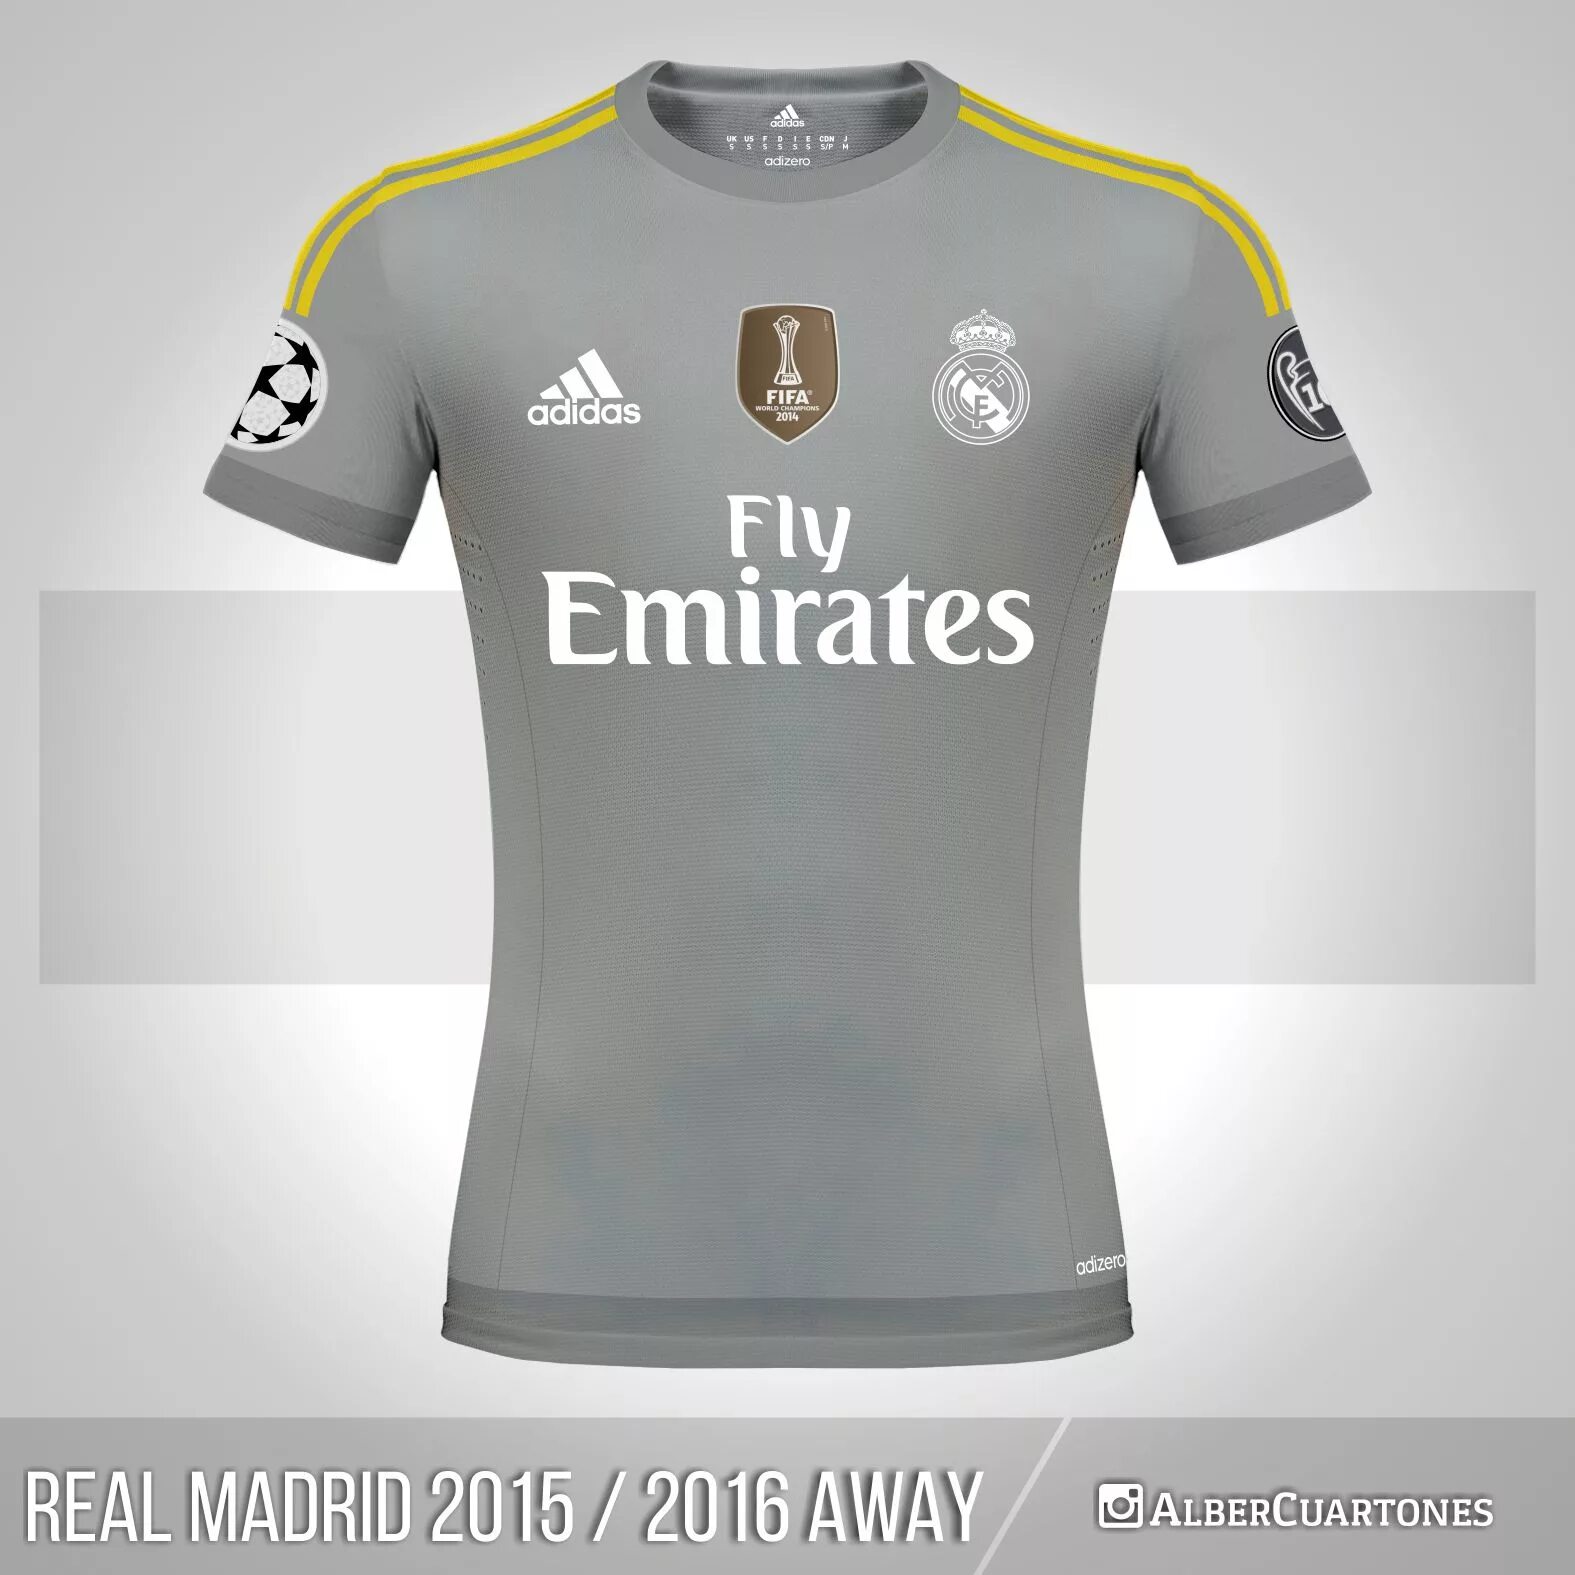 Джерси Реал Мадрид 2016. Джерси Реал Мадрид 2015. Футбольная форма Реал Мадрид 2015 2016. Футболка Реал Мадрид 2016.